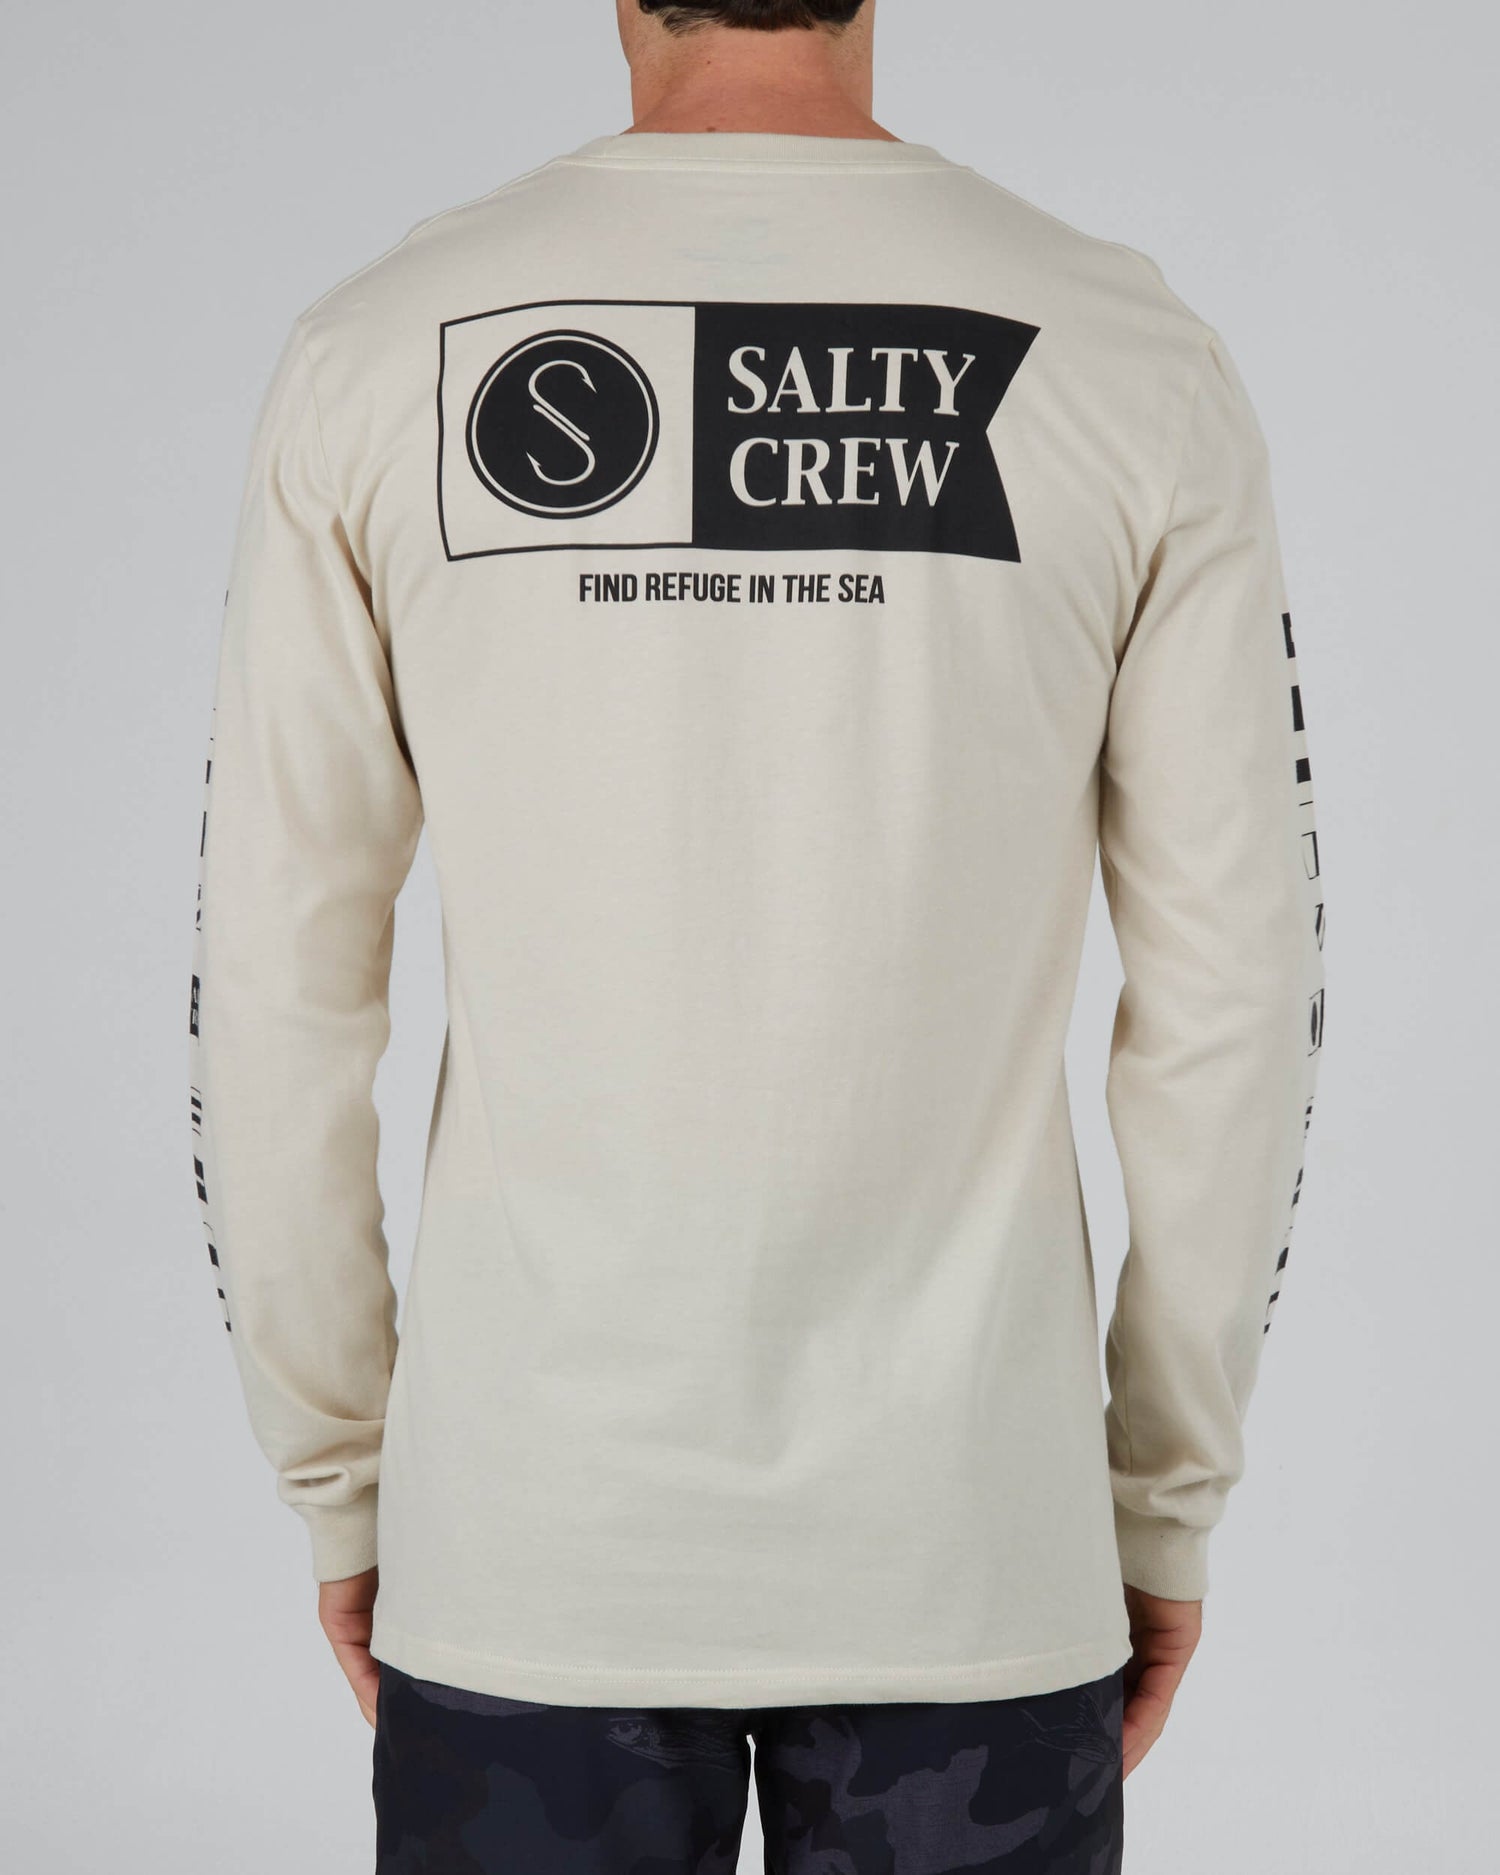 Salty Crew Europe